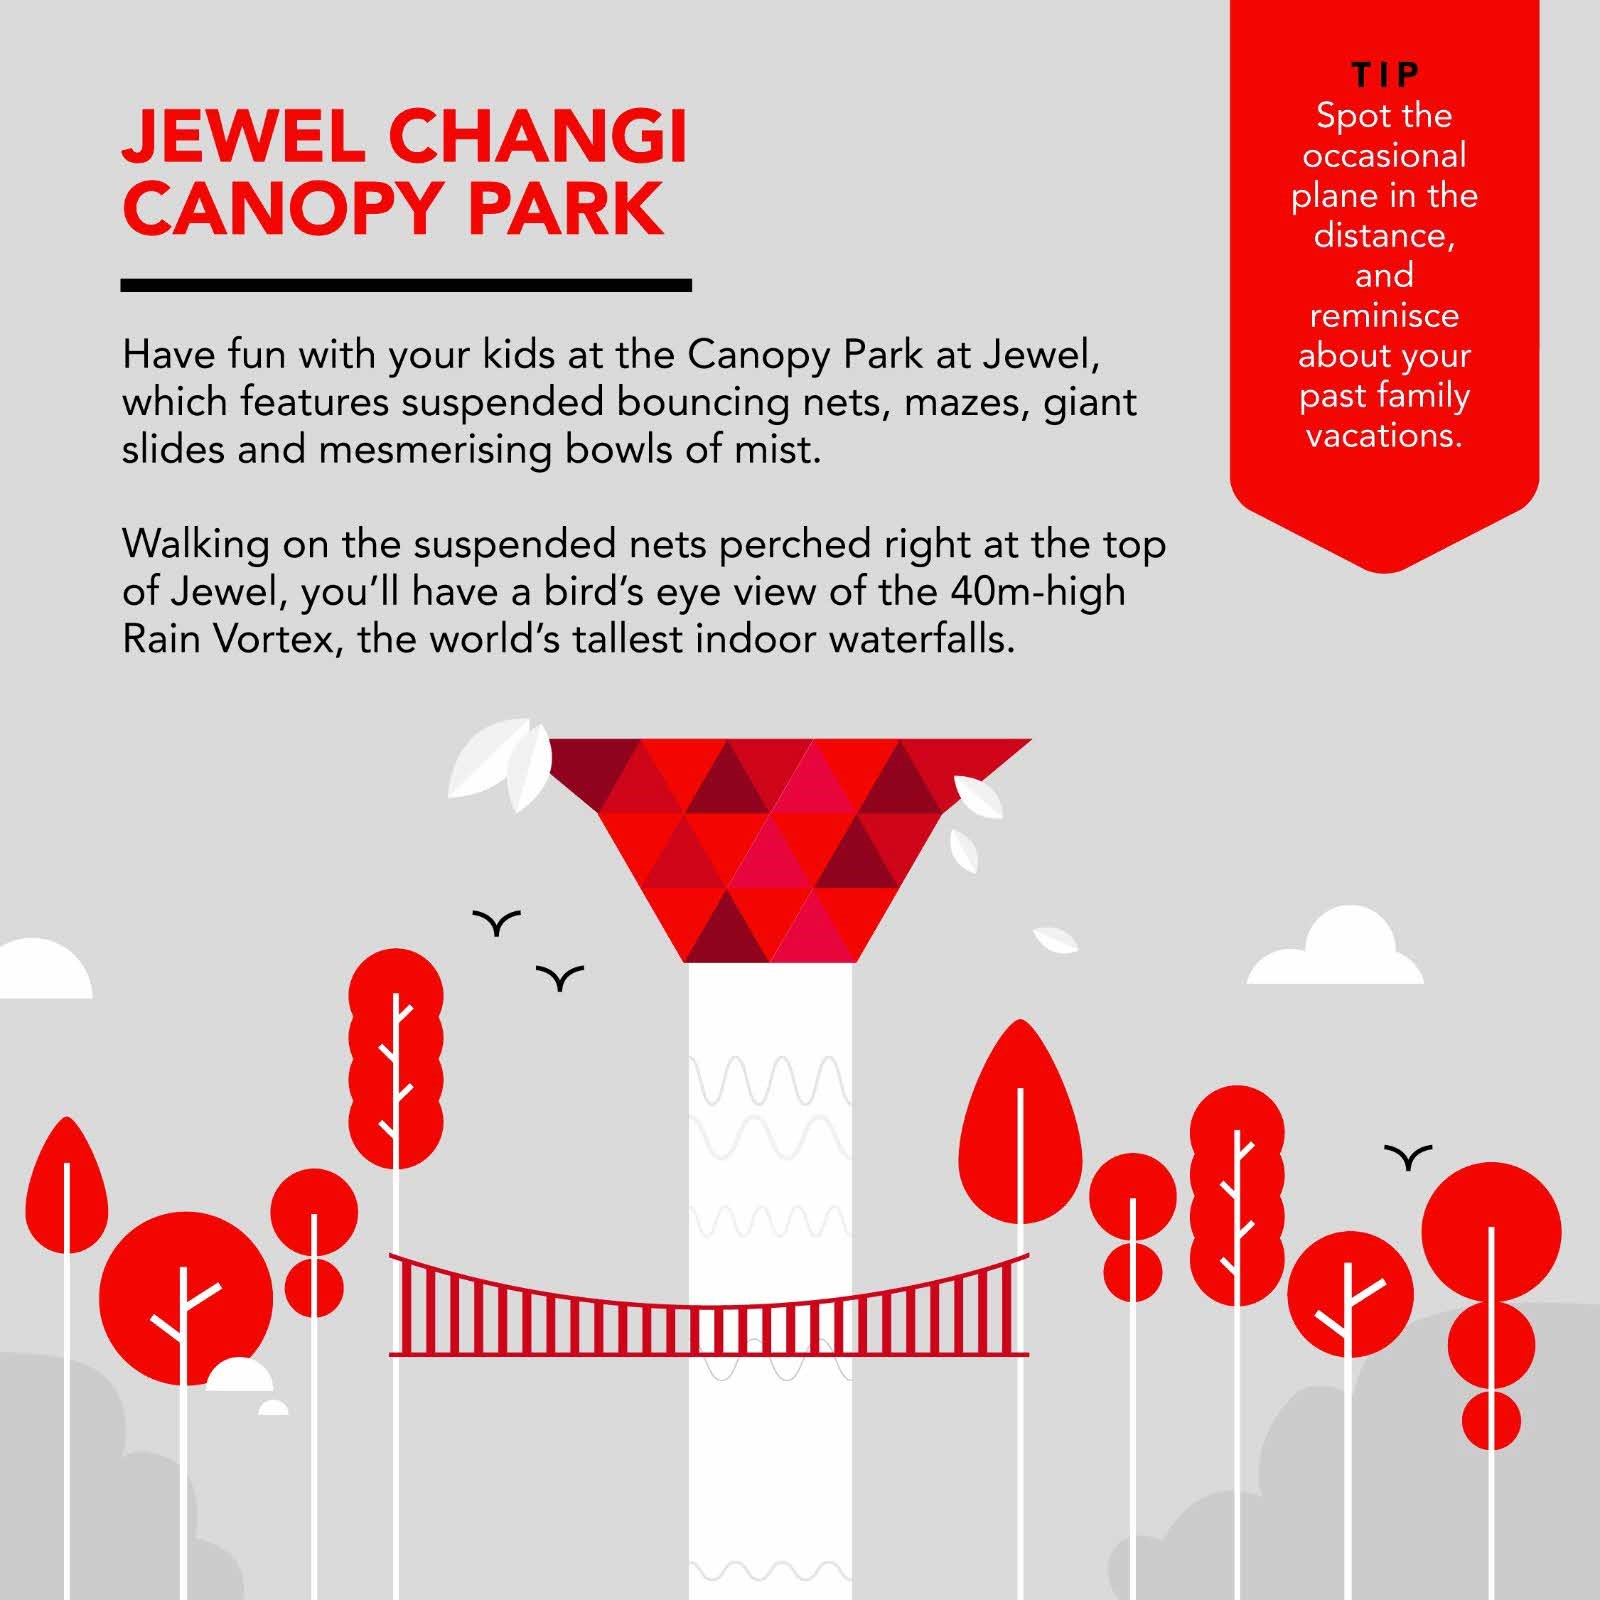 Jewel Changi Activities at Canopy Park